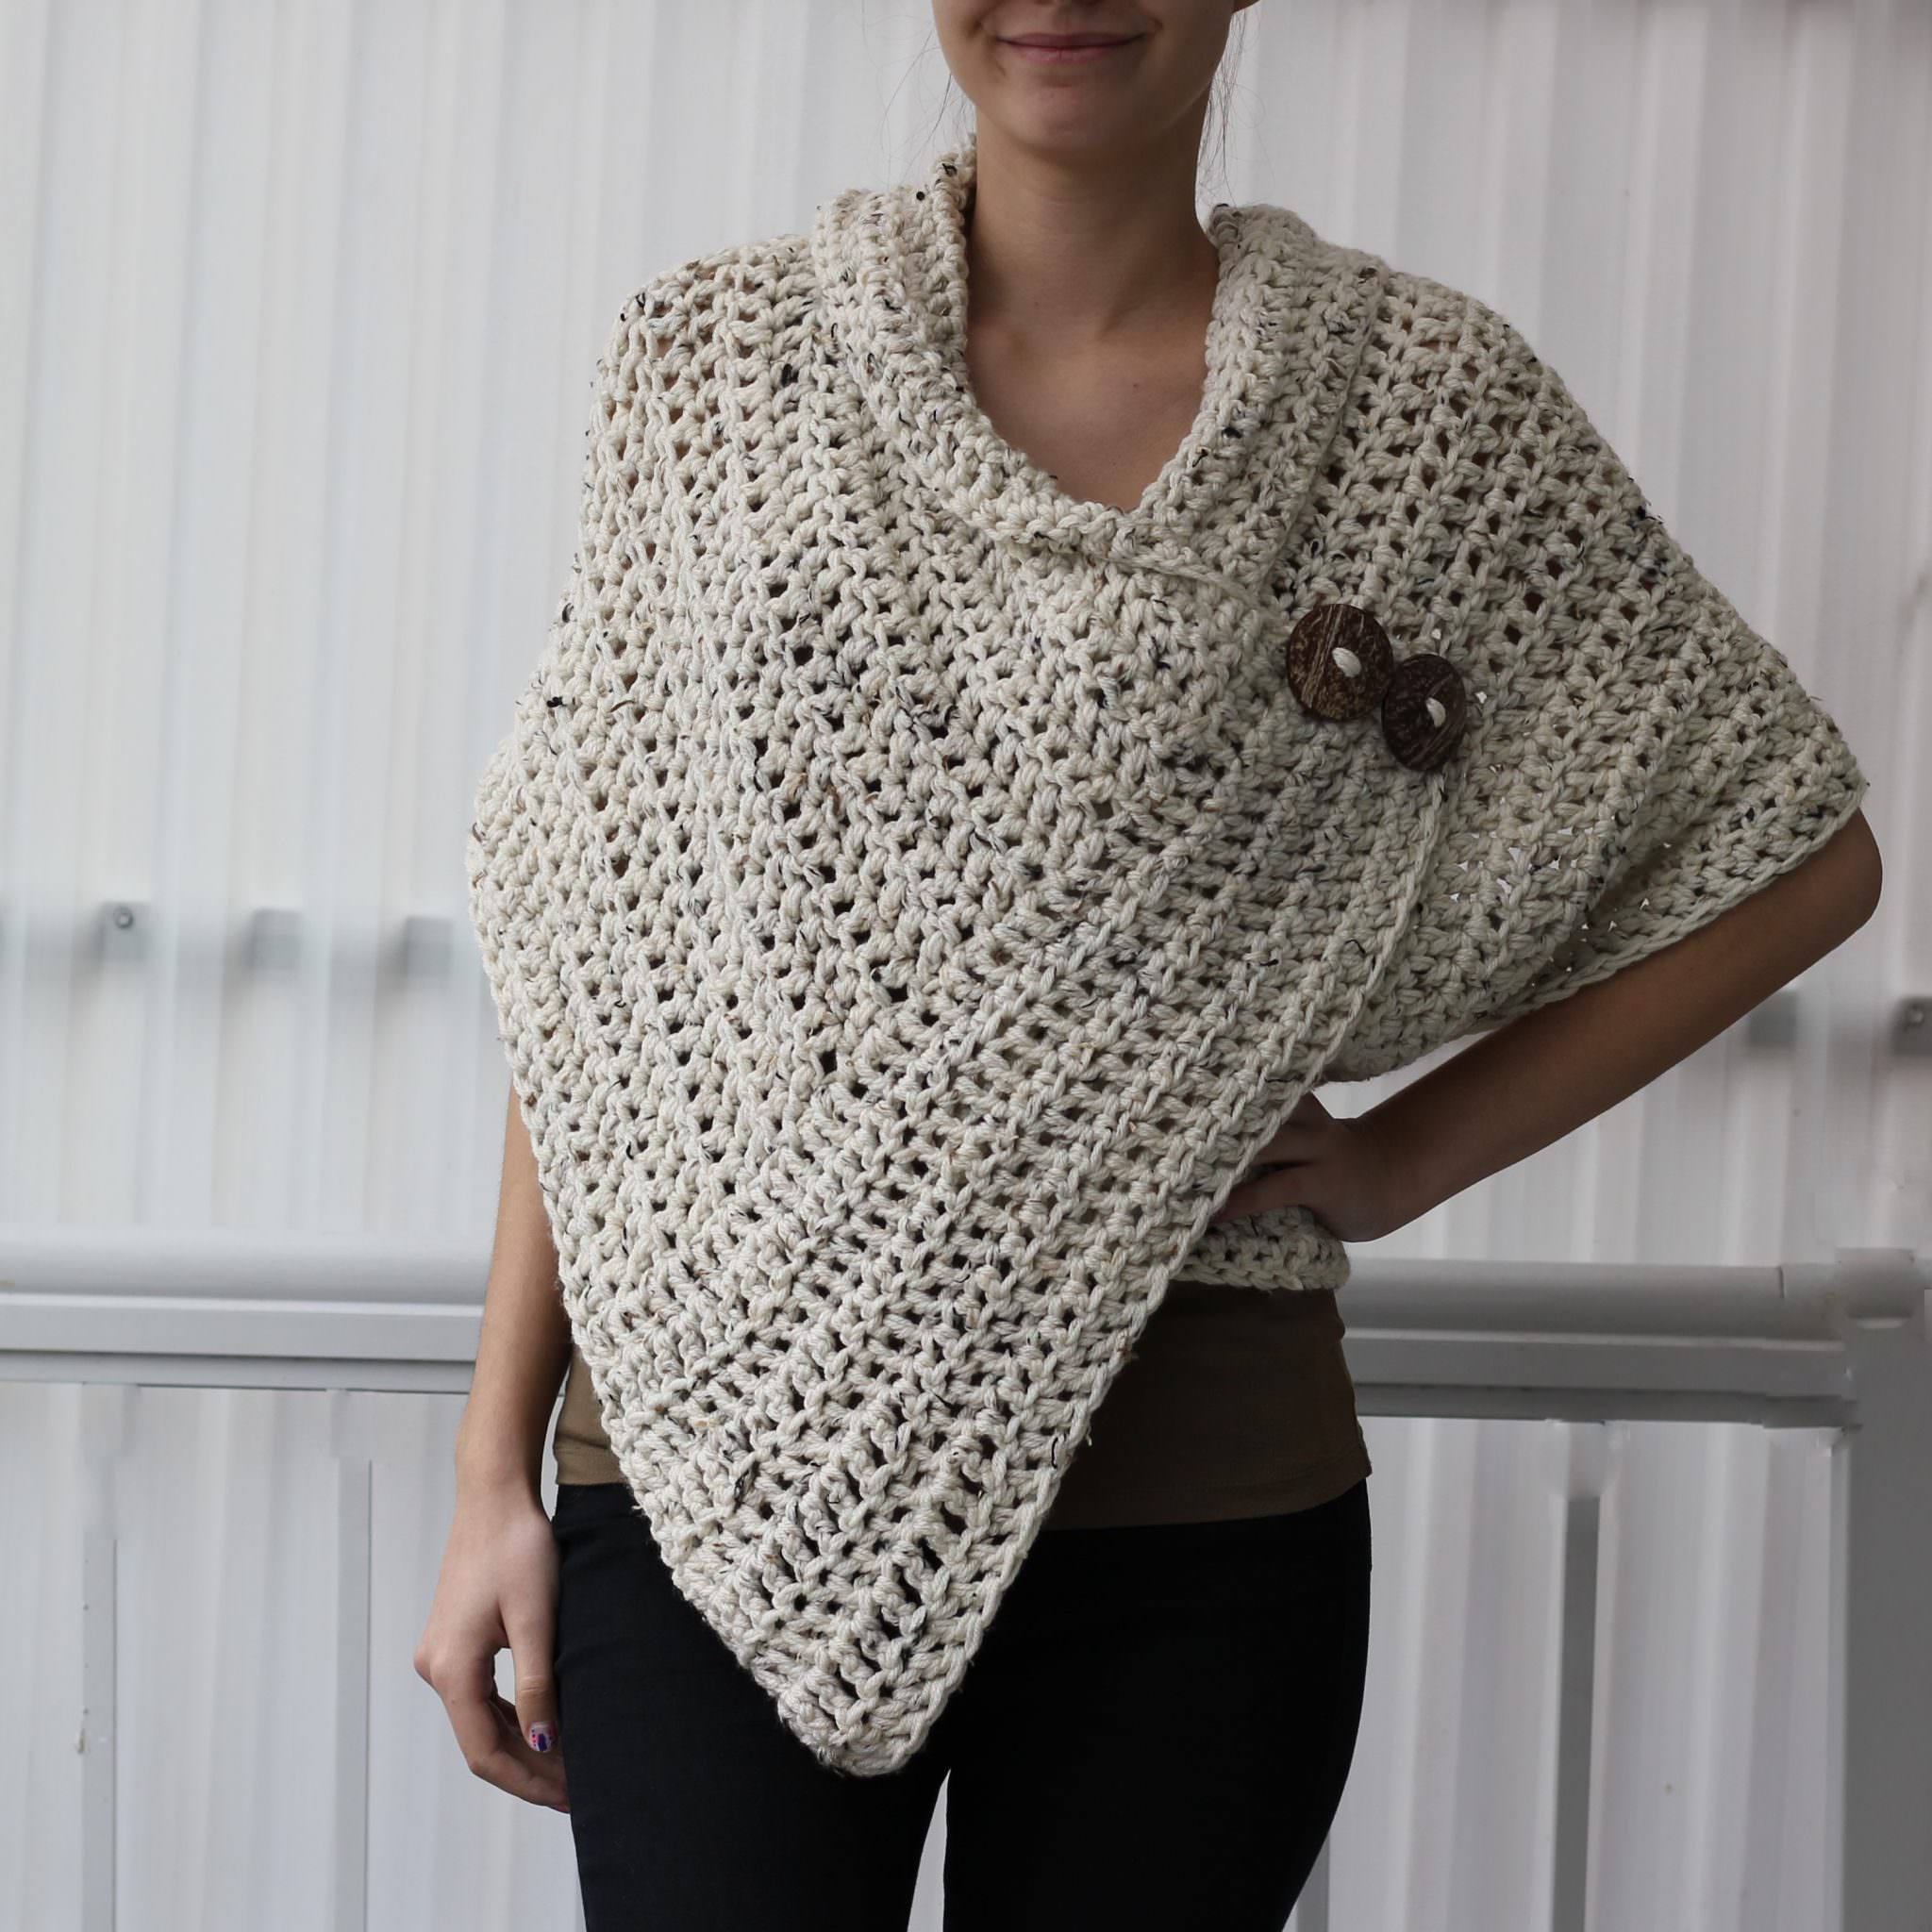 AZALI Wrap - Crochet Pattern - The Easy Design